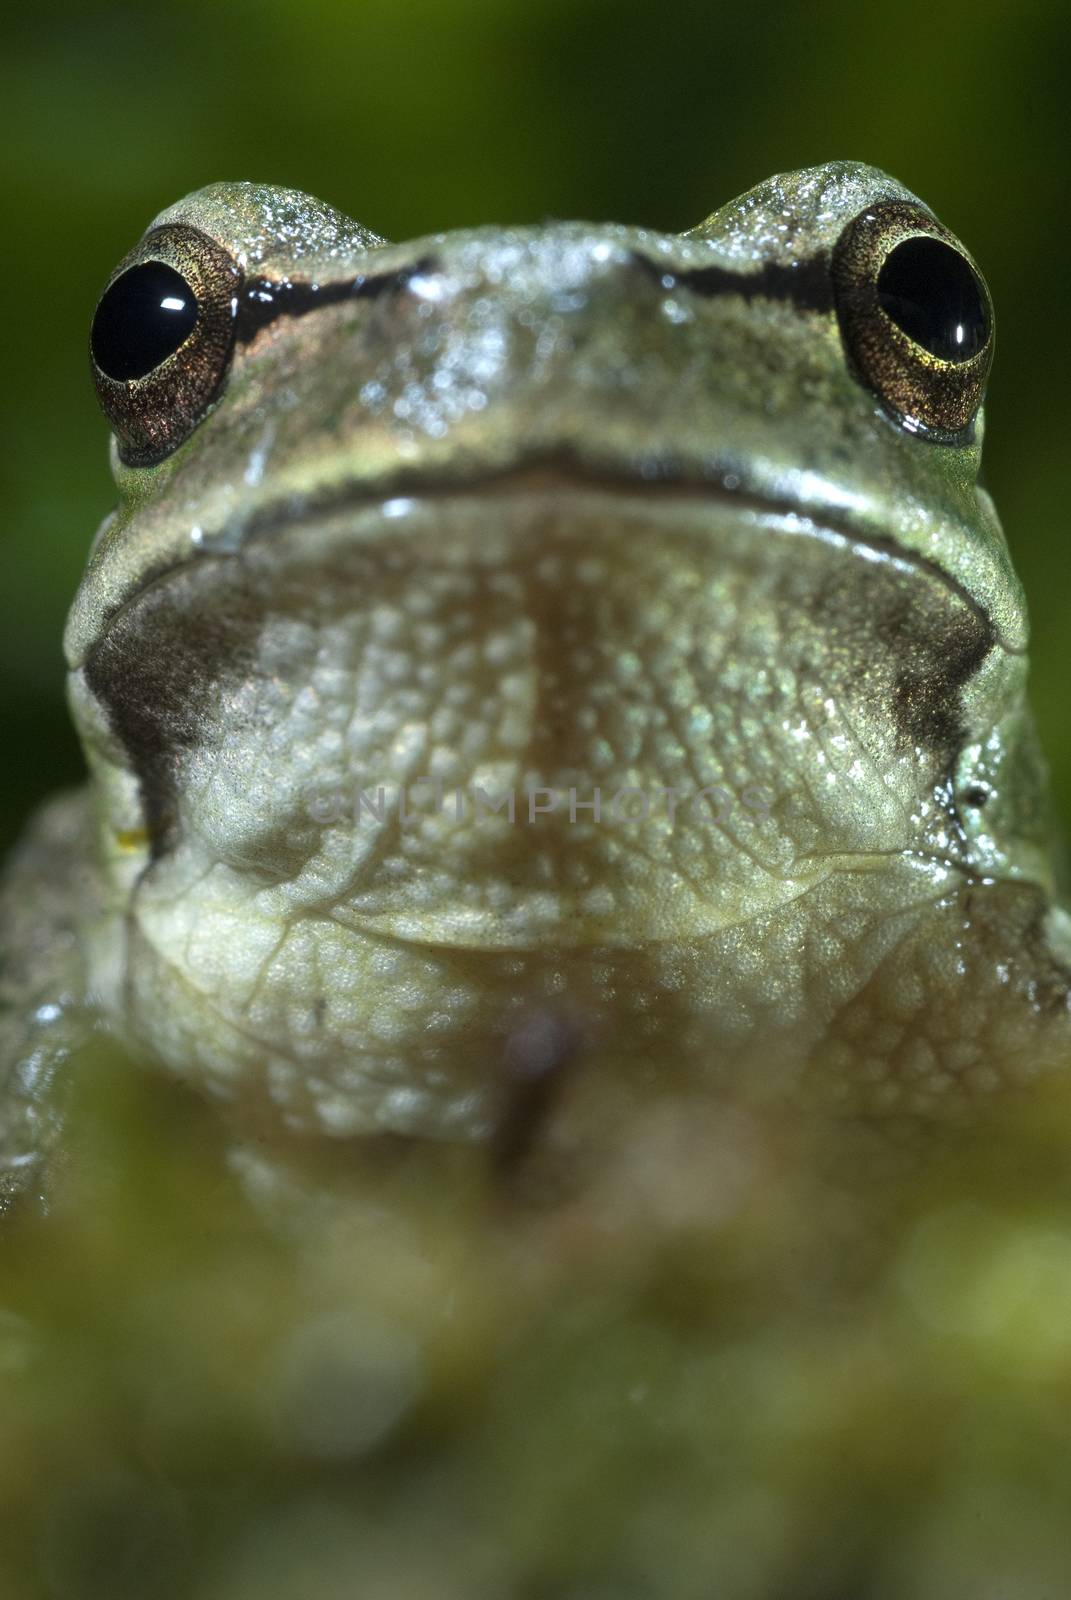 Nice amphibian green European tree frog, Hyla arborea, details of the eyes, portrait